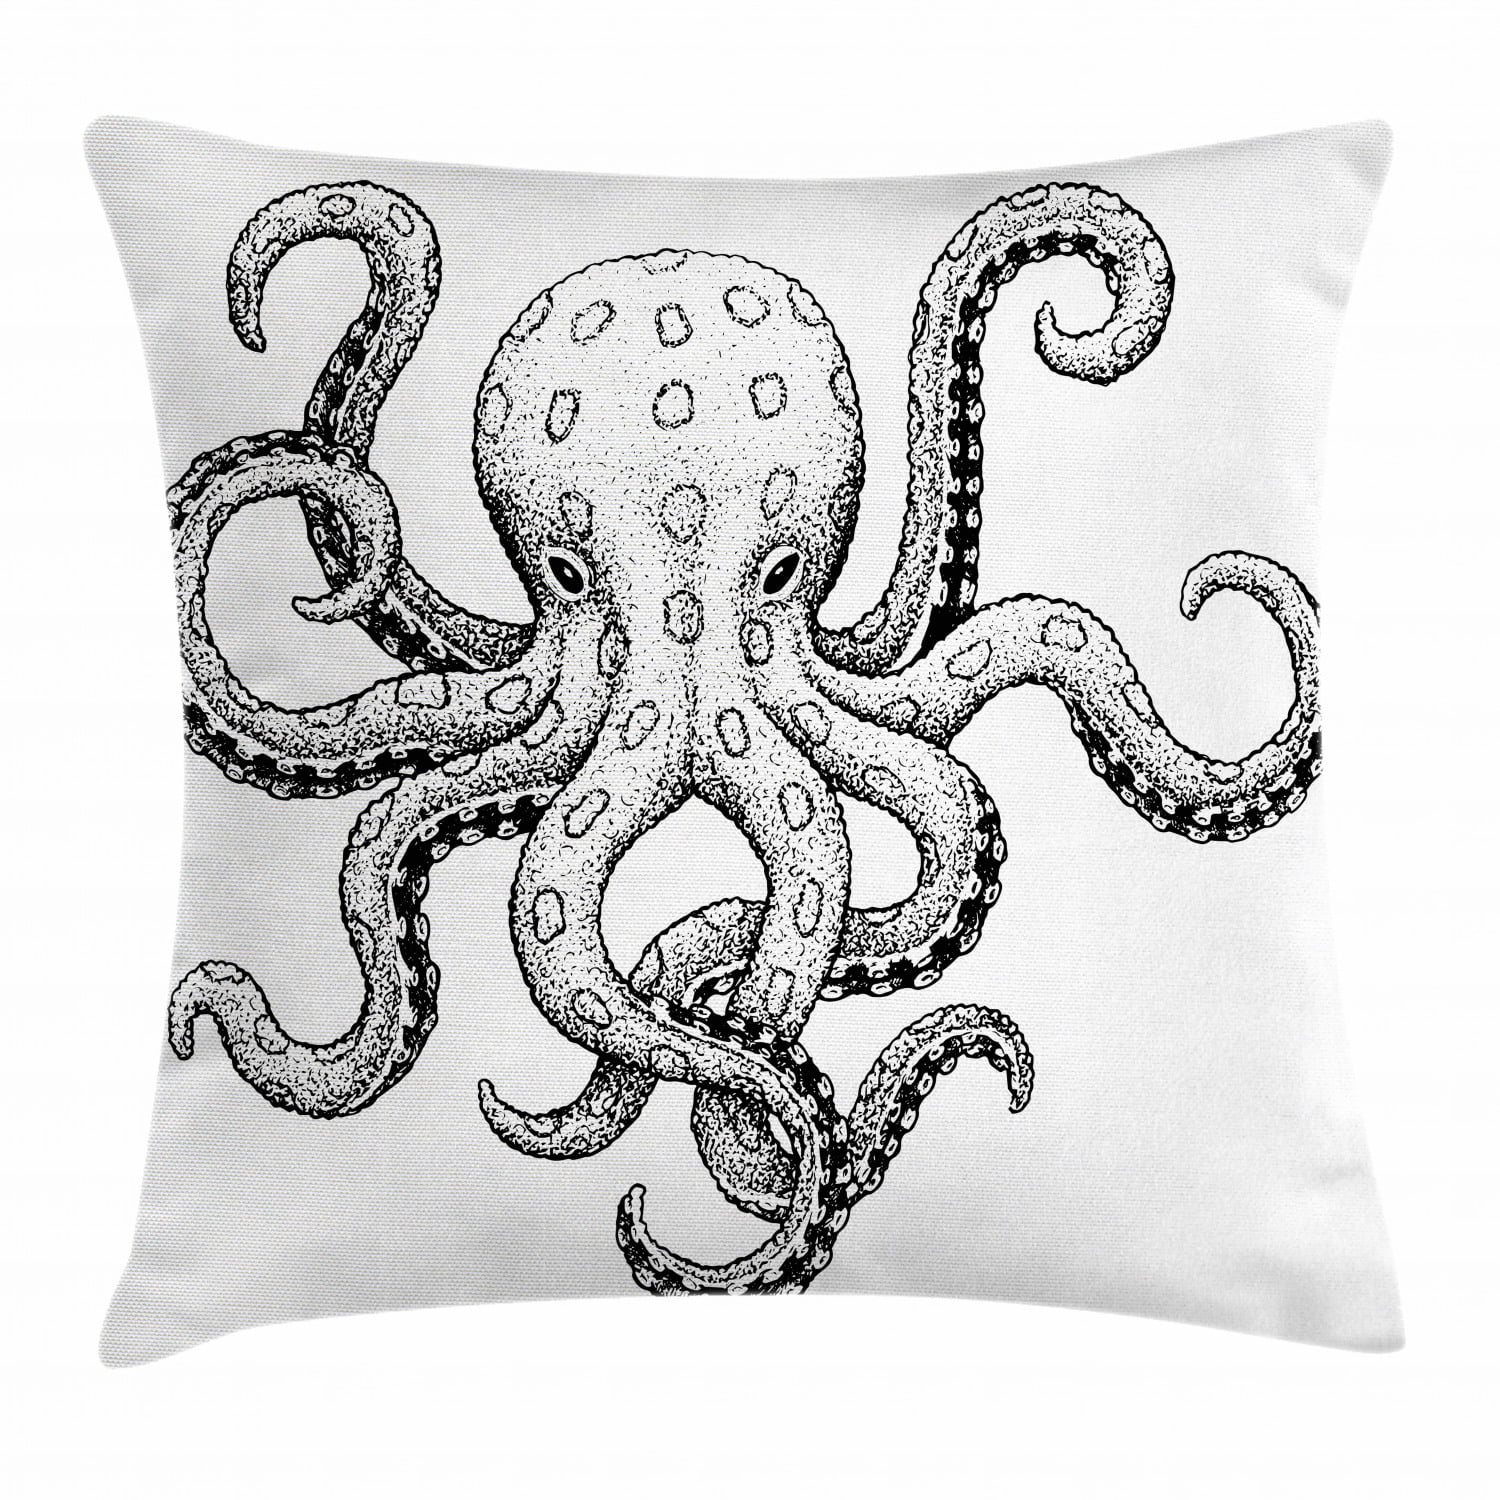 Black Octopus Ocean Beach Nautical Standard Pillowcase Pillow Cover Case 1 One 